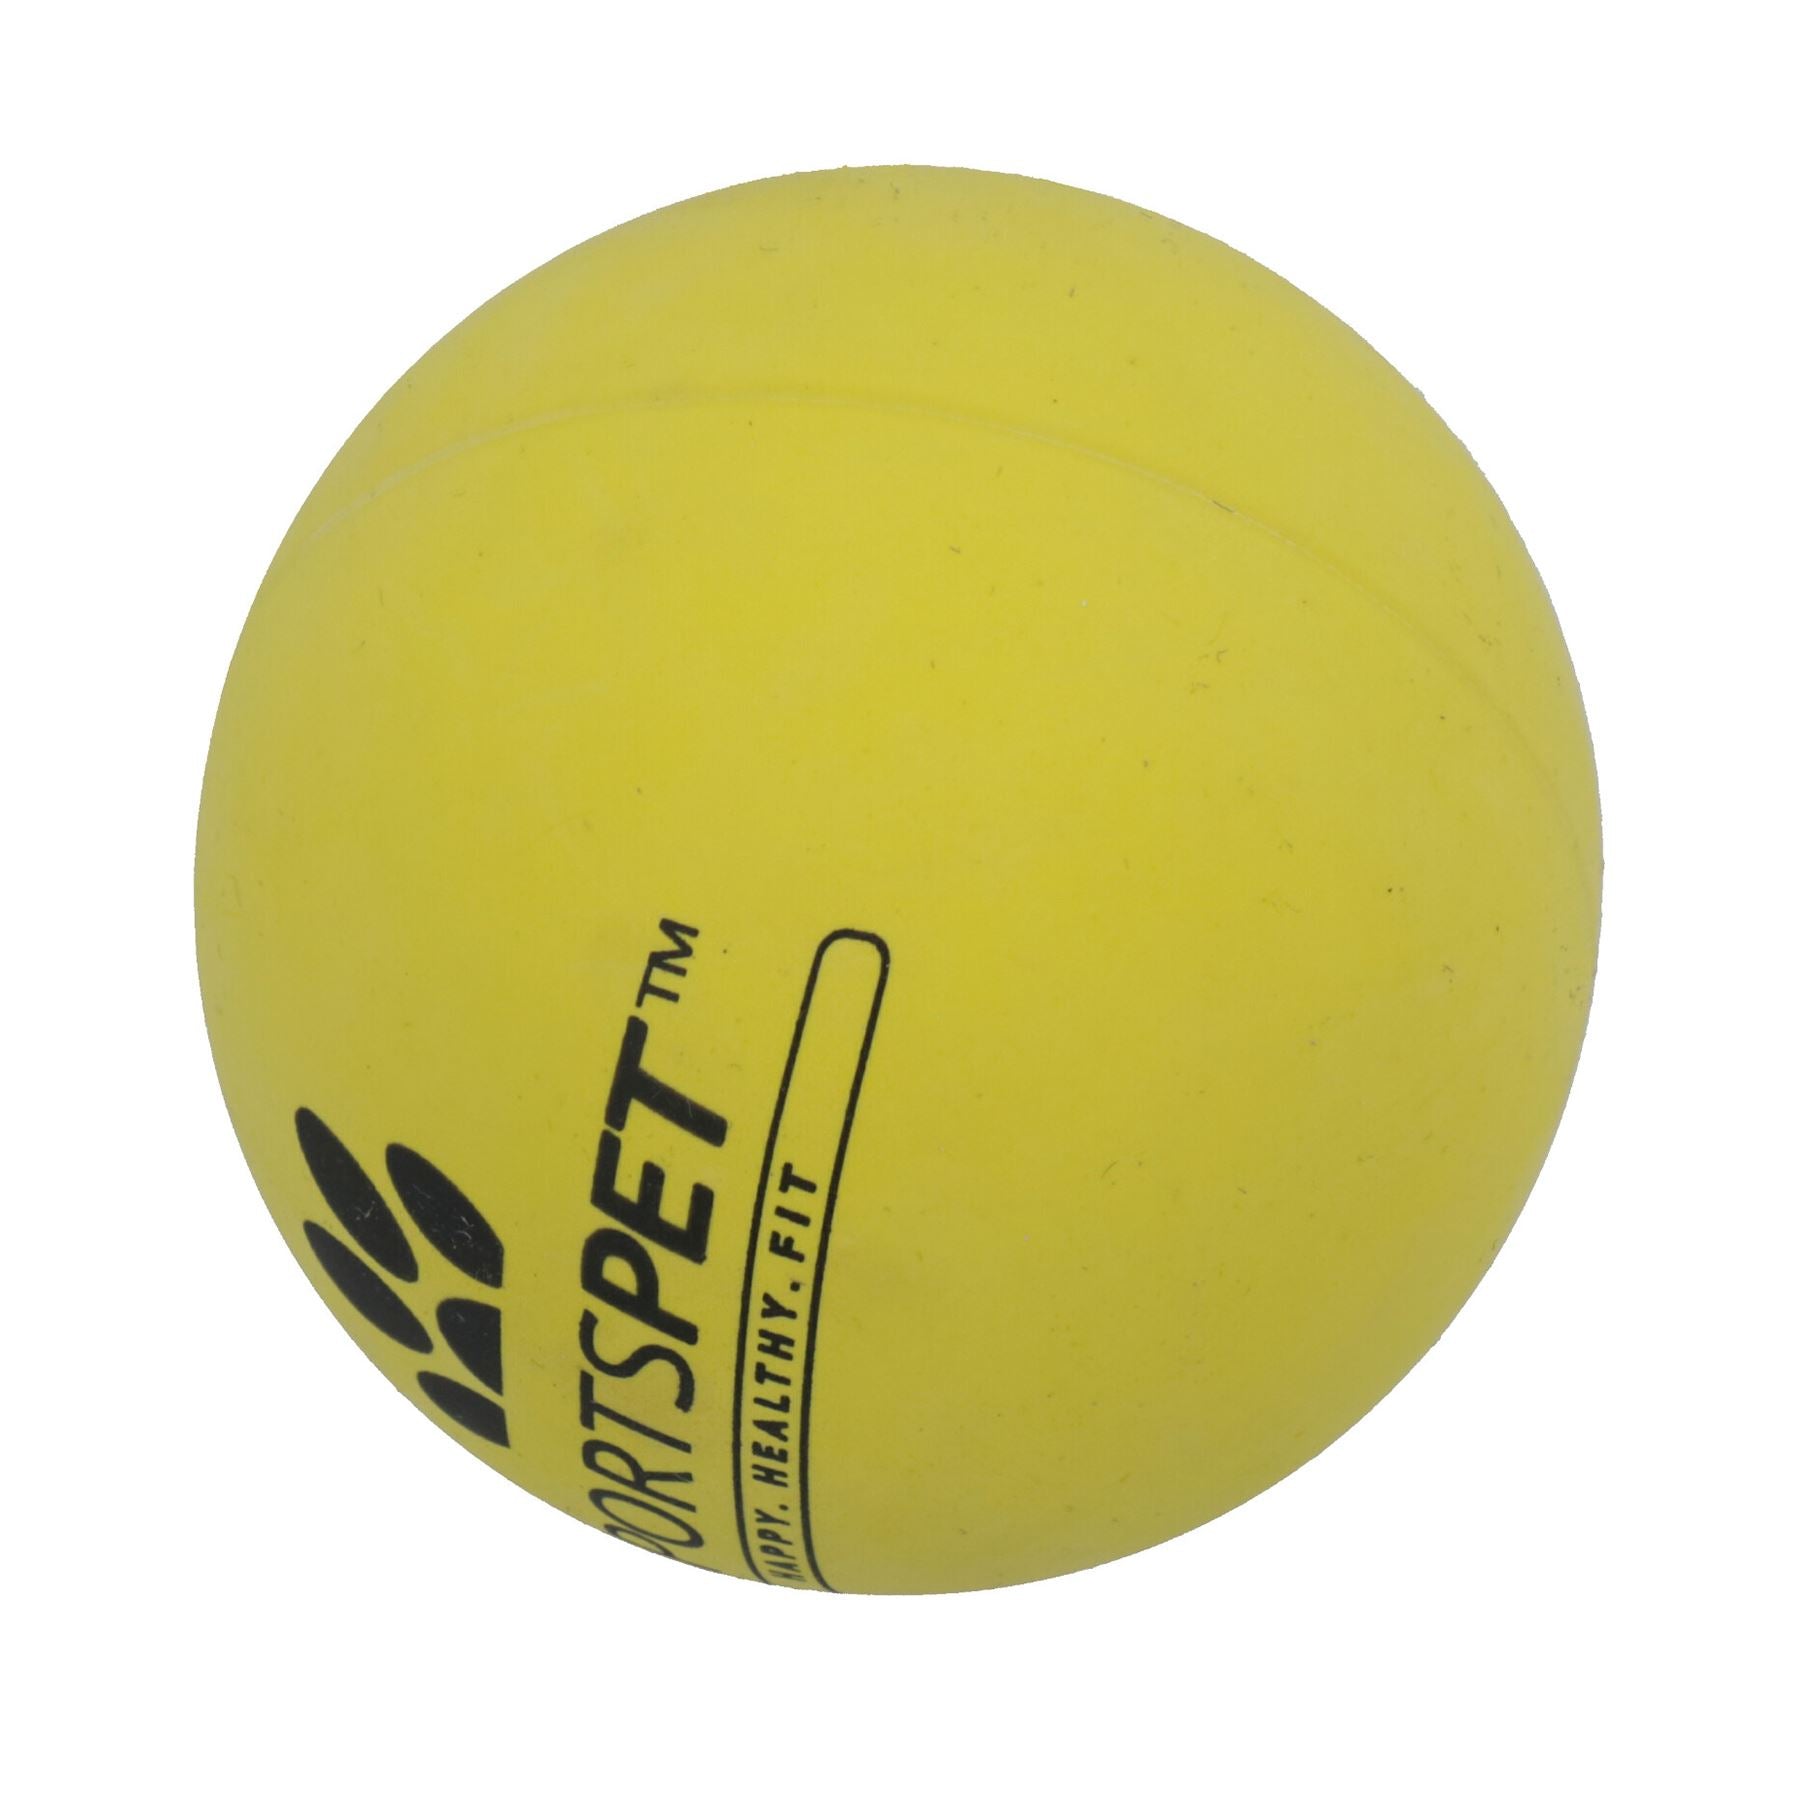 Single Ball High Bounce Premium Non Toxic Rubber Balls Dog Play Assorted Colour